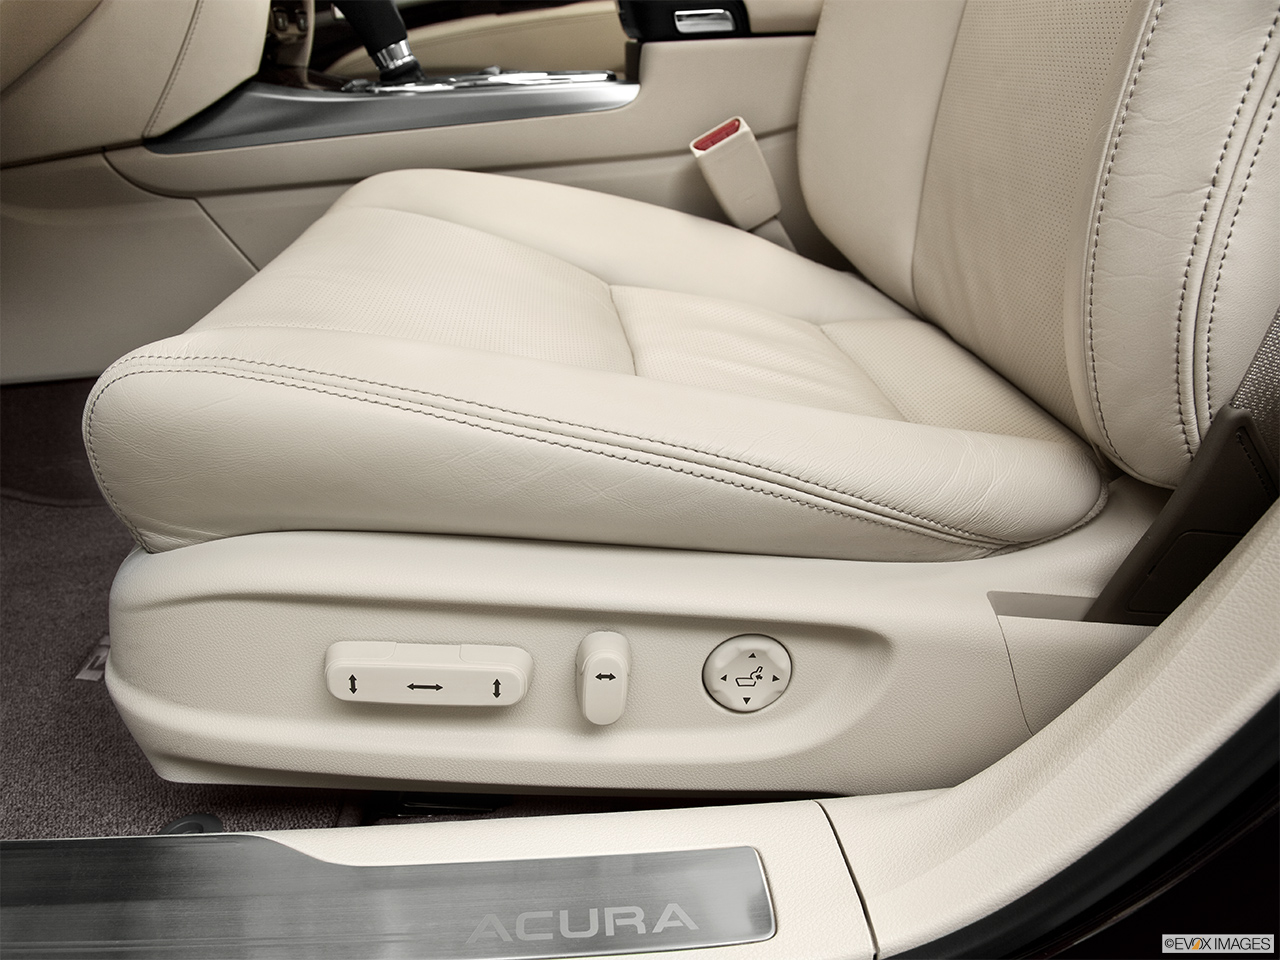 2014 Acura RLX Base Seat Adjustment Controllers. 